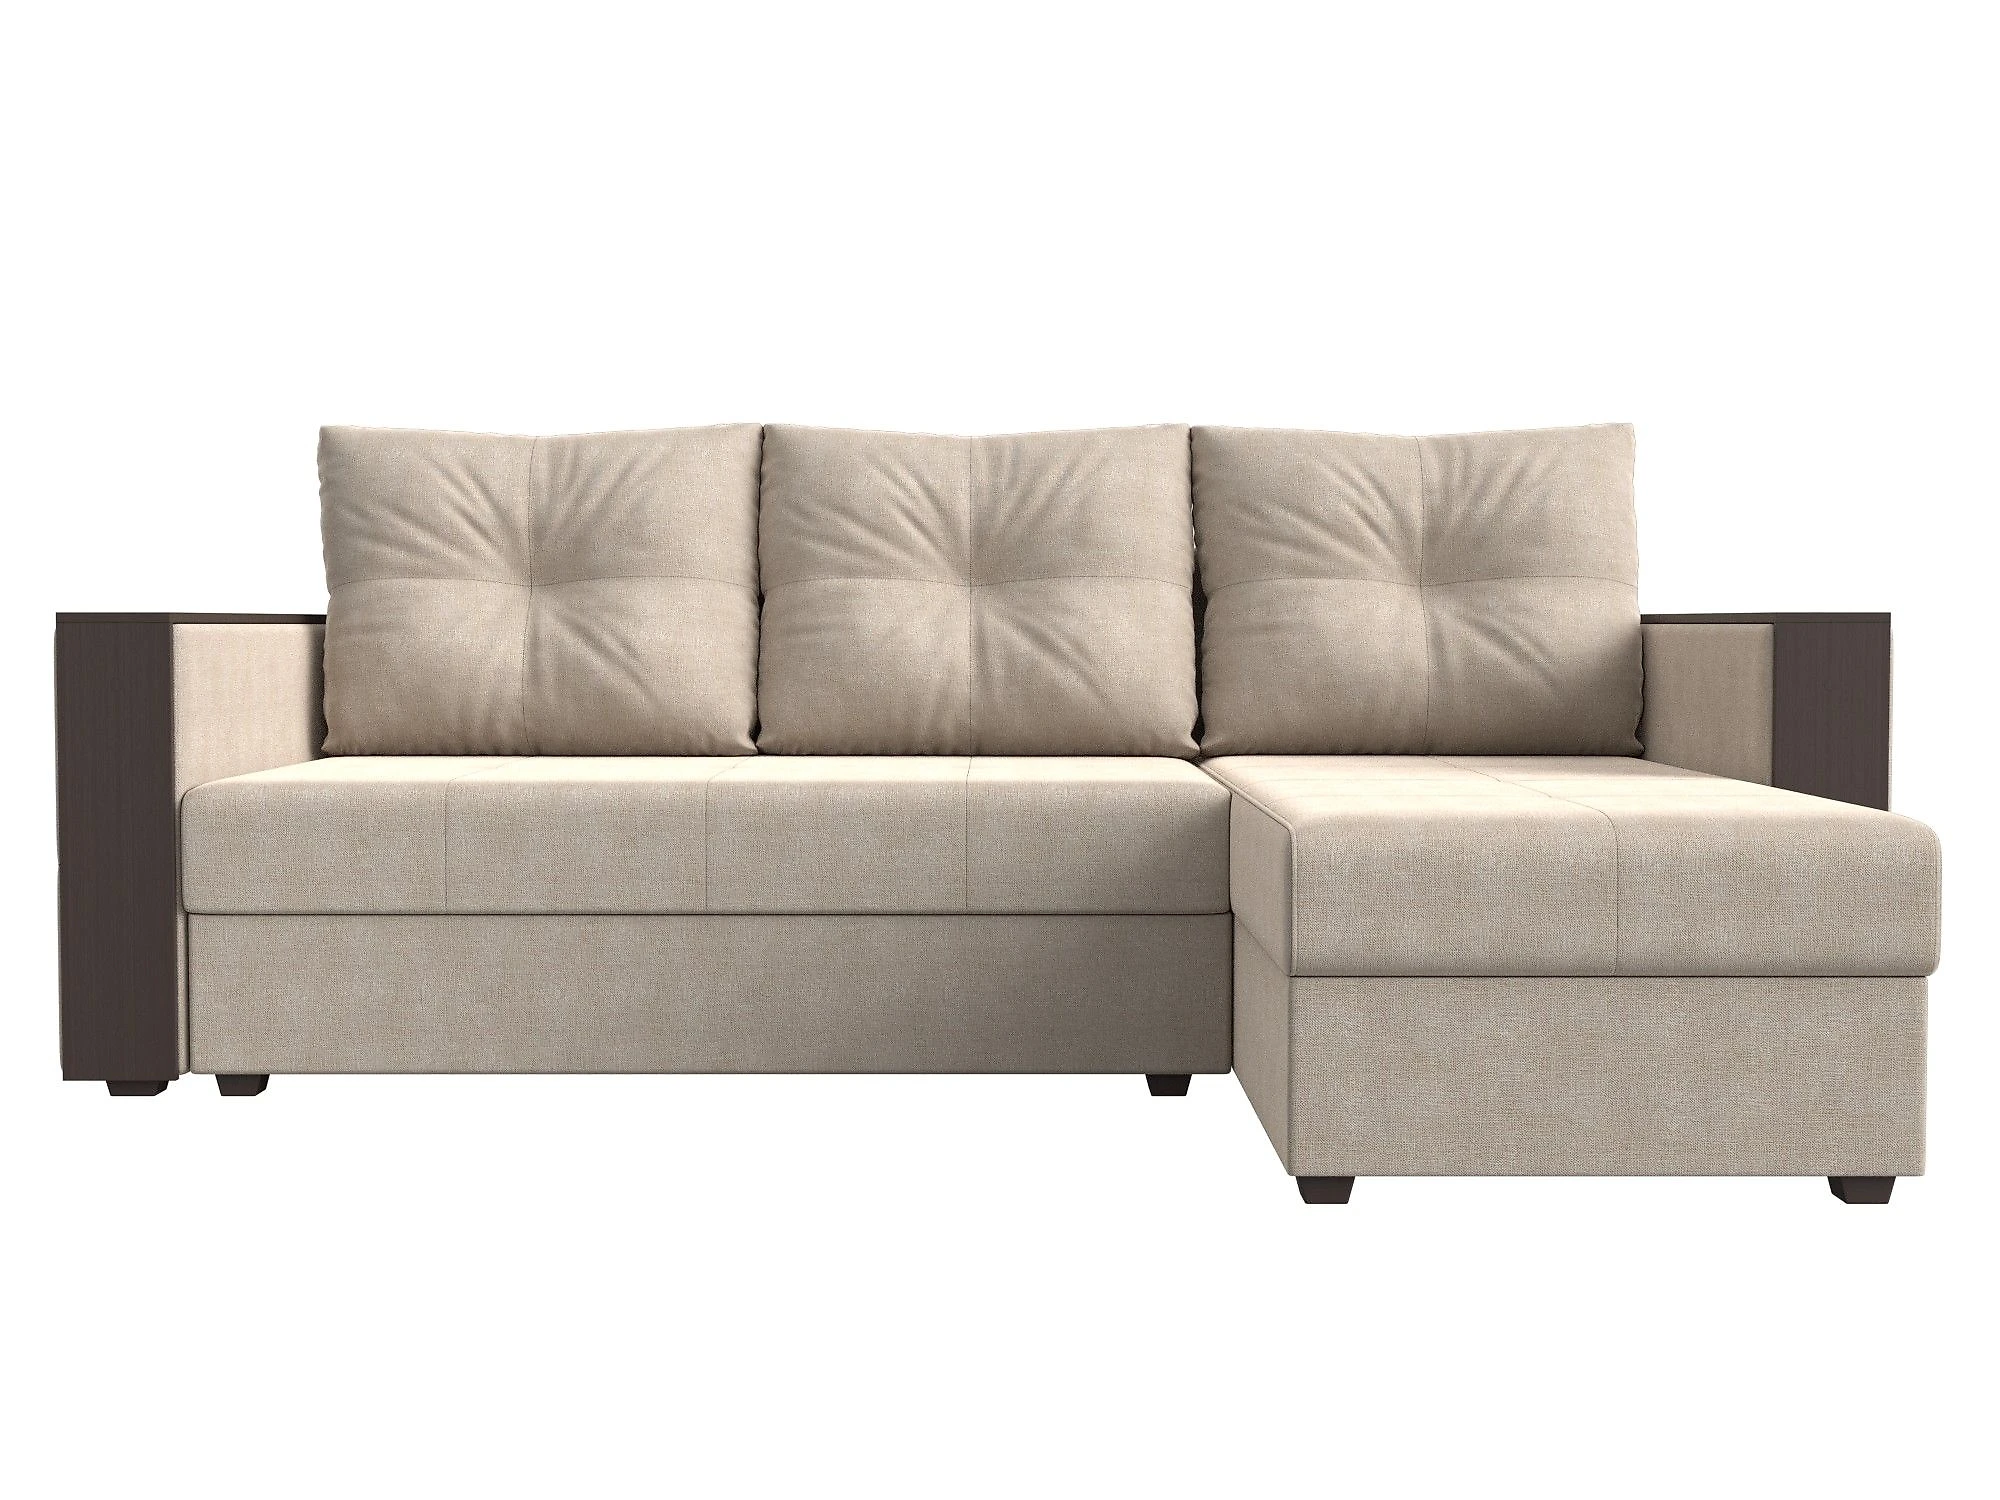  угловой диван из рогожки Валенсия Лайт Кантри Дизайн 2